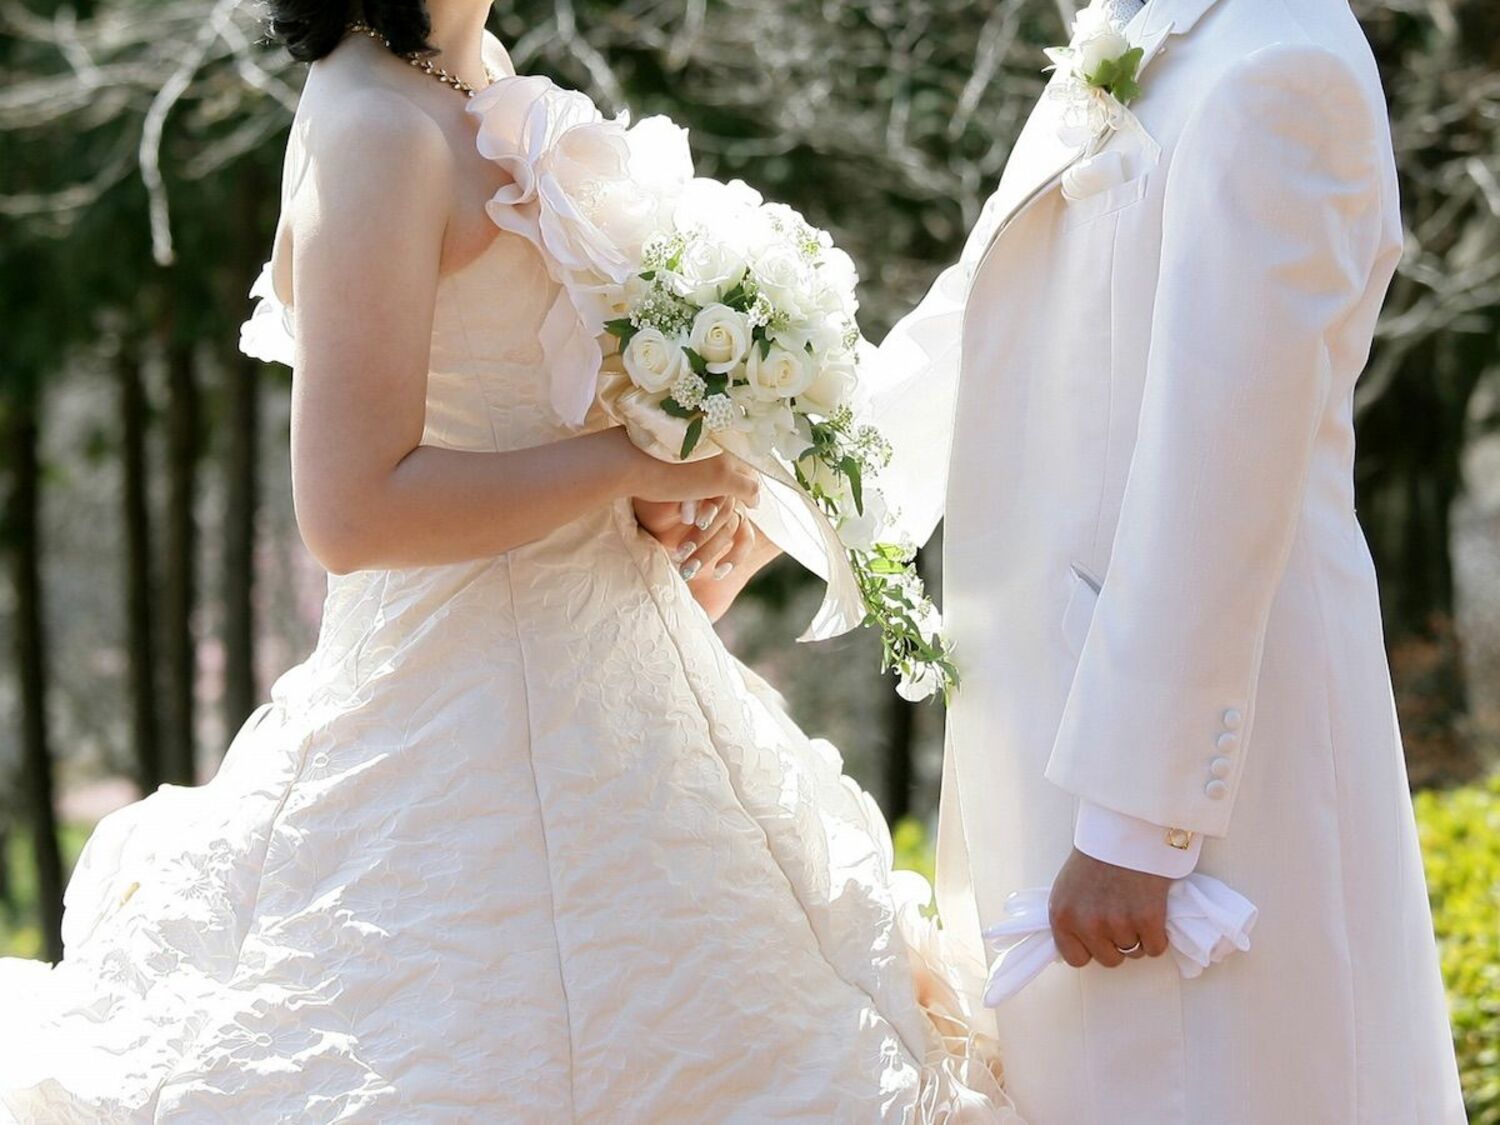 NEWS・加藤シゲアキ、結婚観で「ハイスペ女子に猛反論」の画像